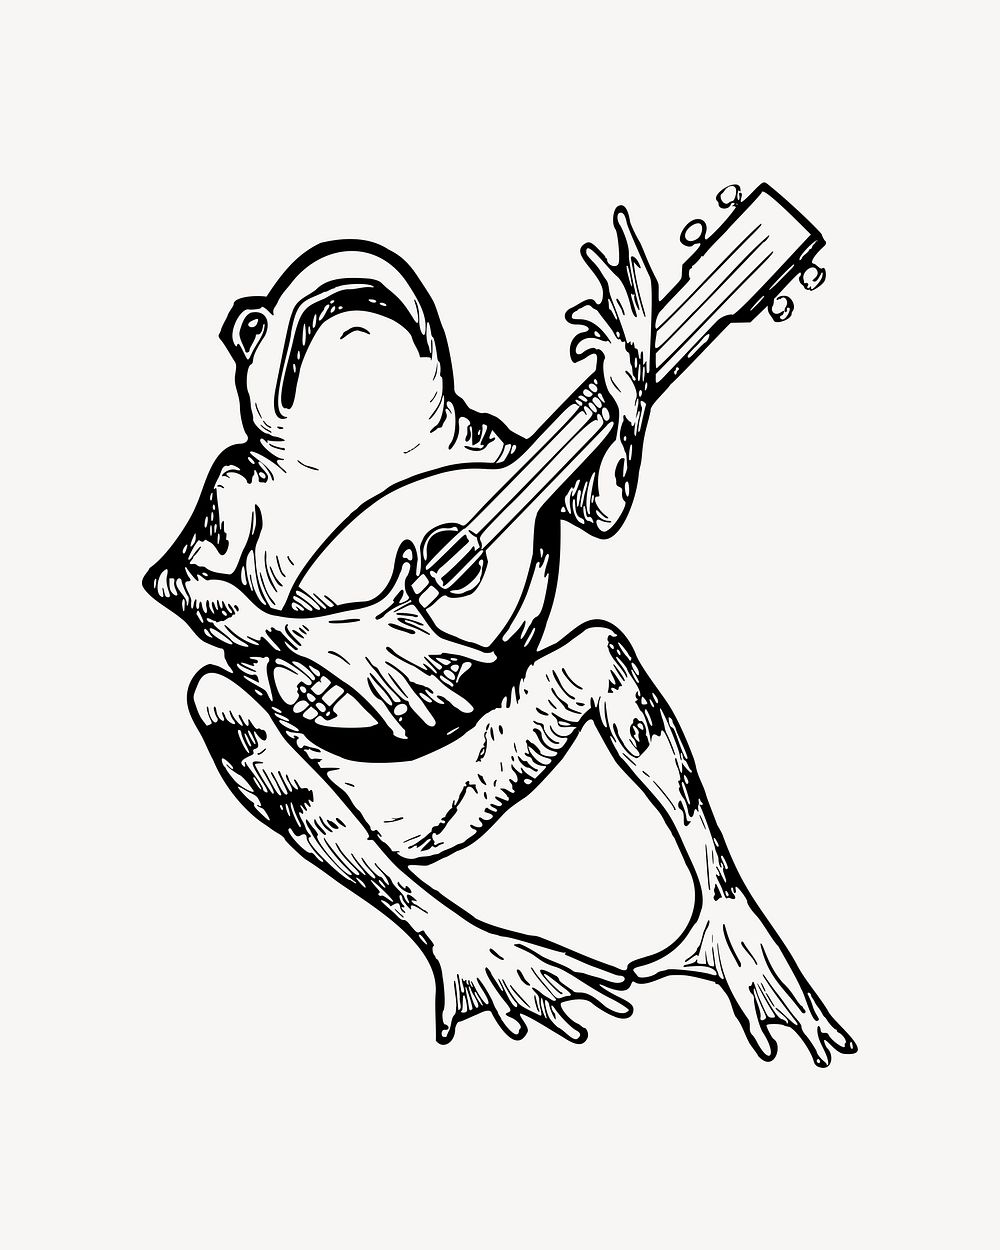 Musician frog clip art vector. Free public domain CC0 image.